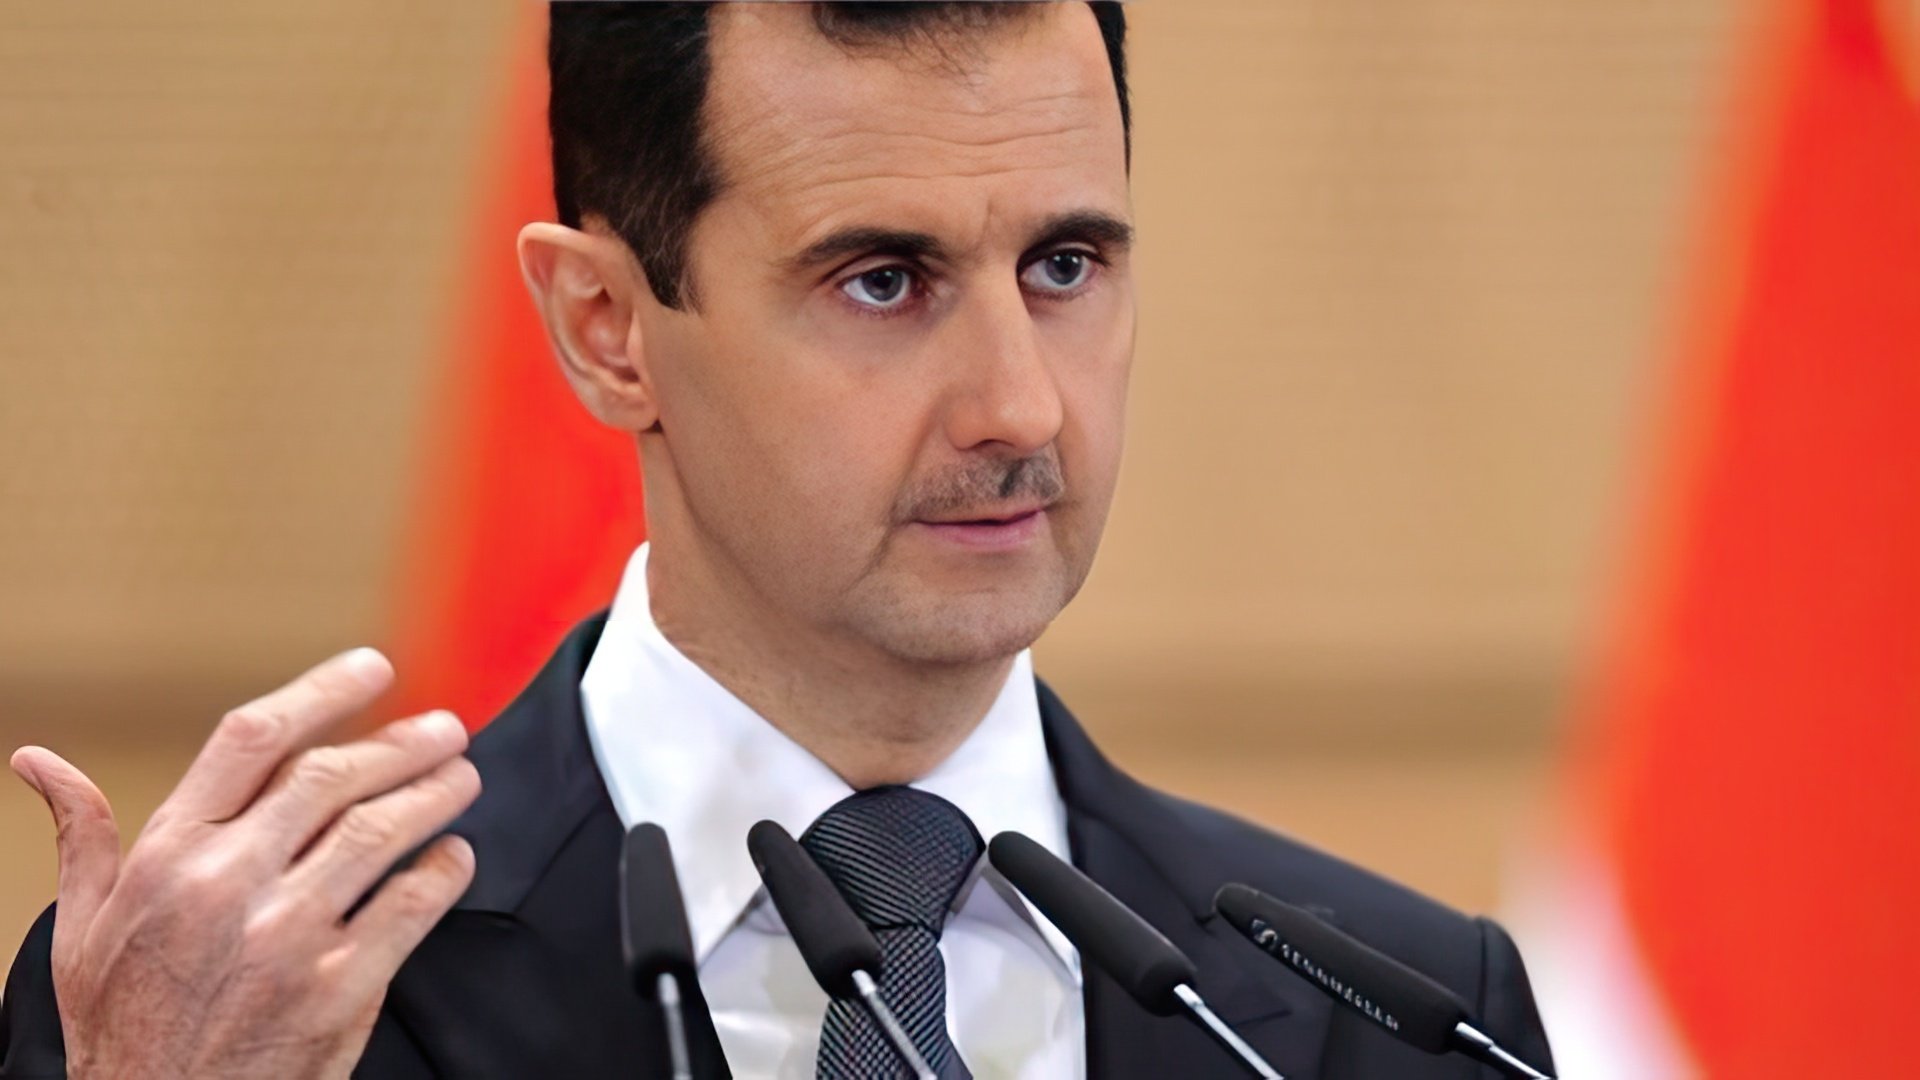 Syrian politician Bashar Al-Assad